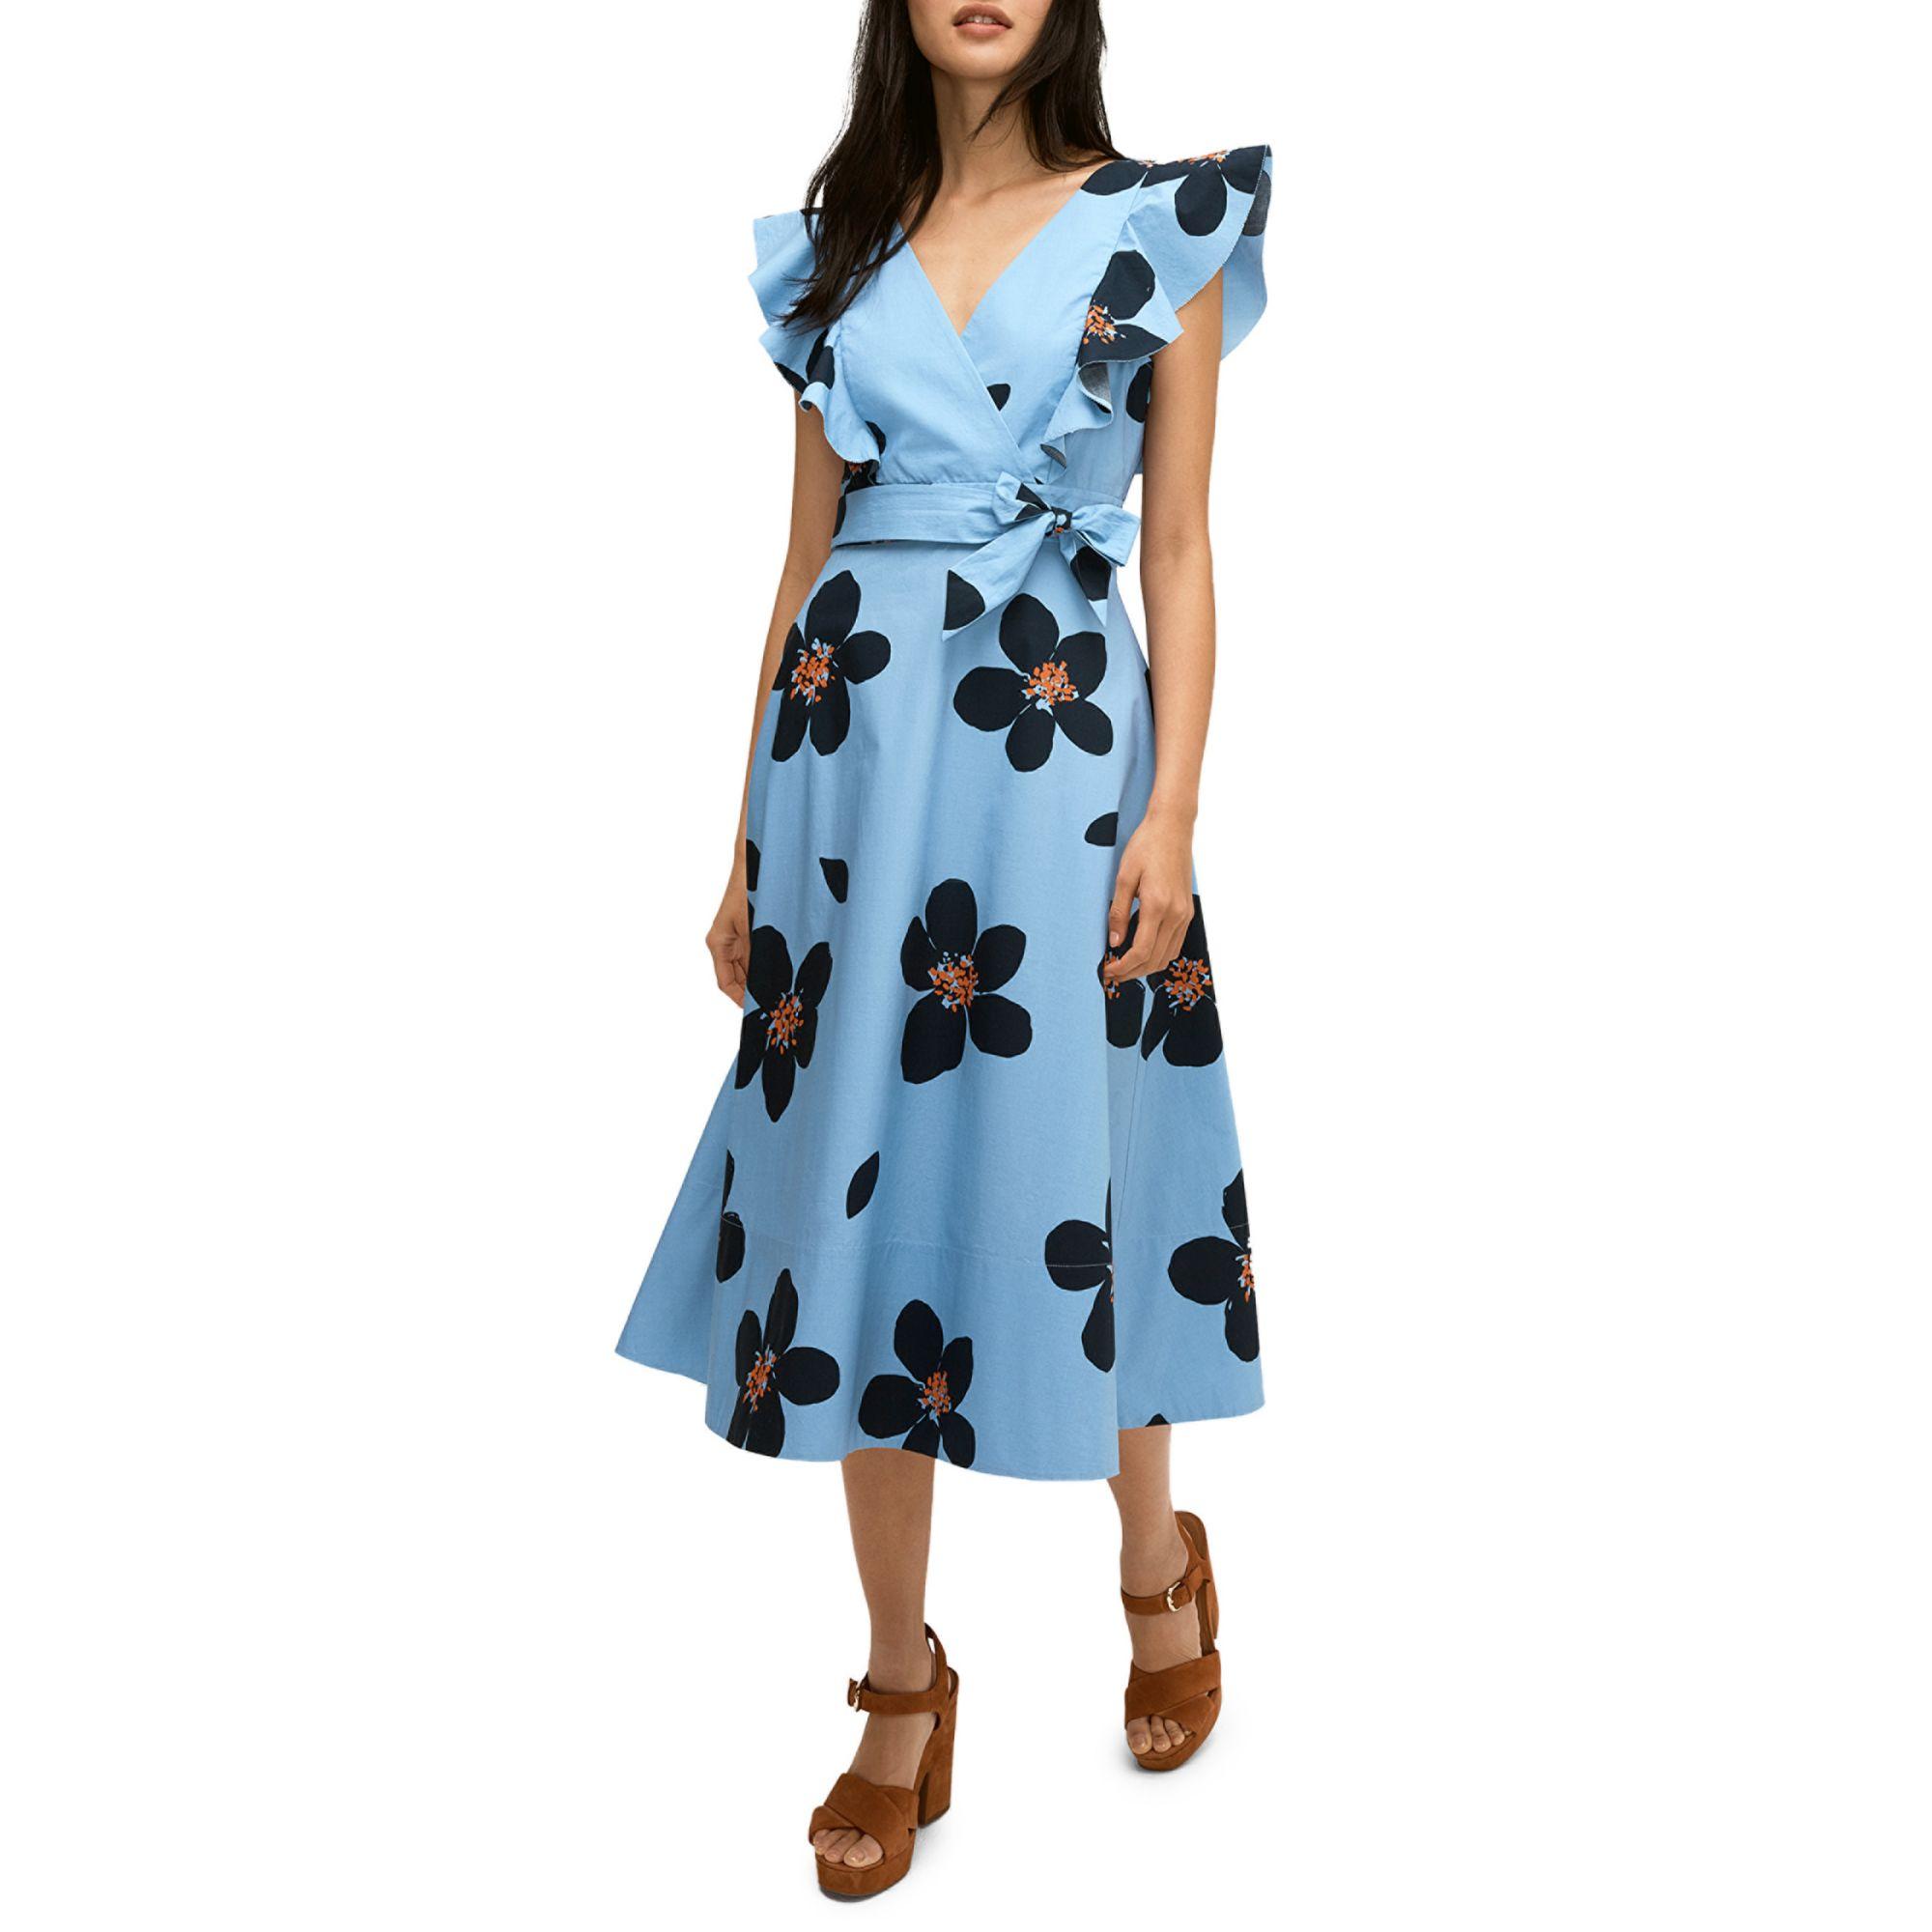 Kate Spade Floral Dress in Blue